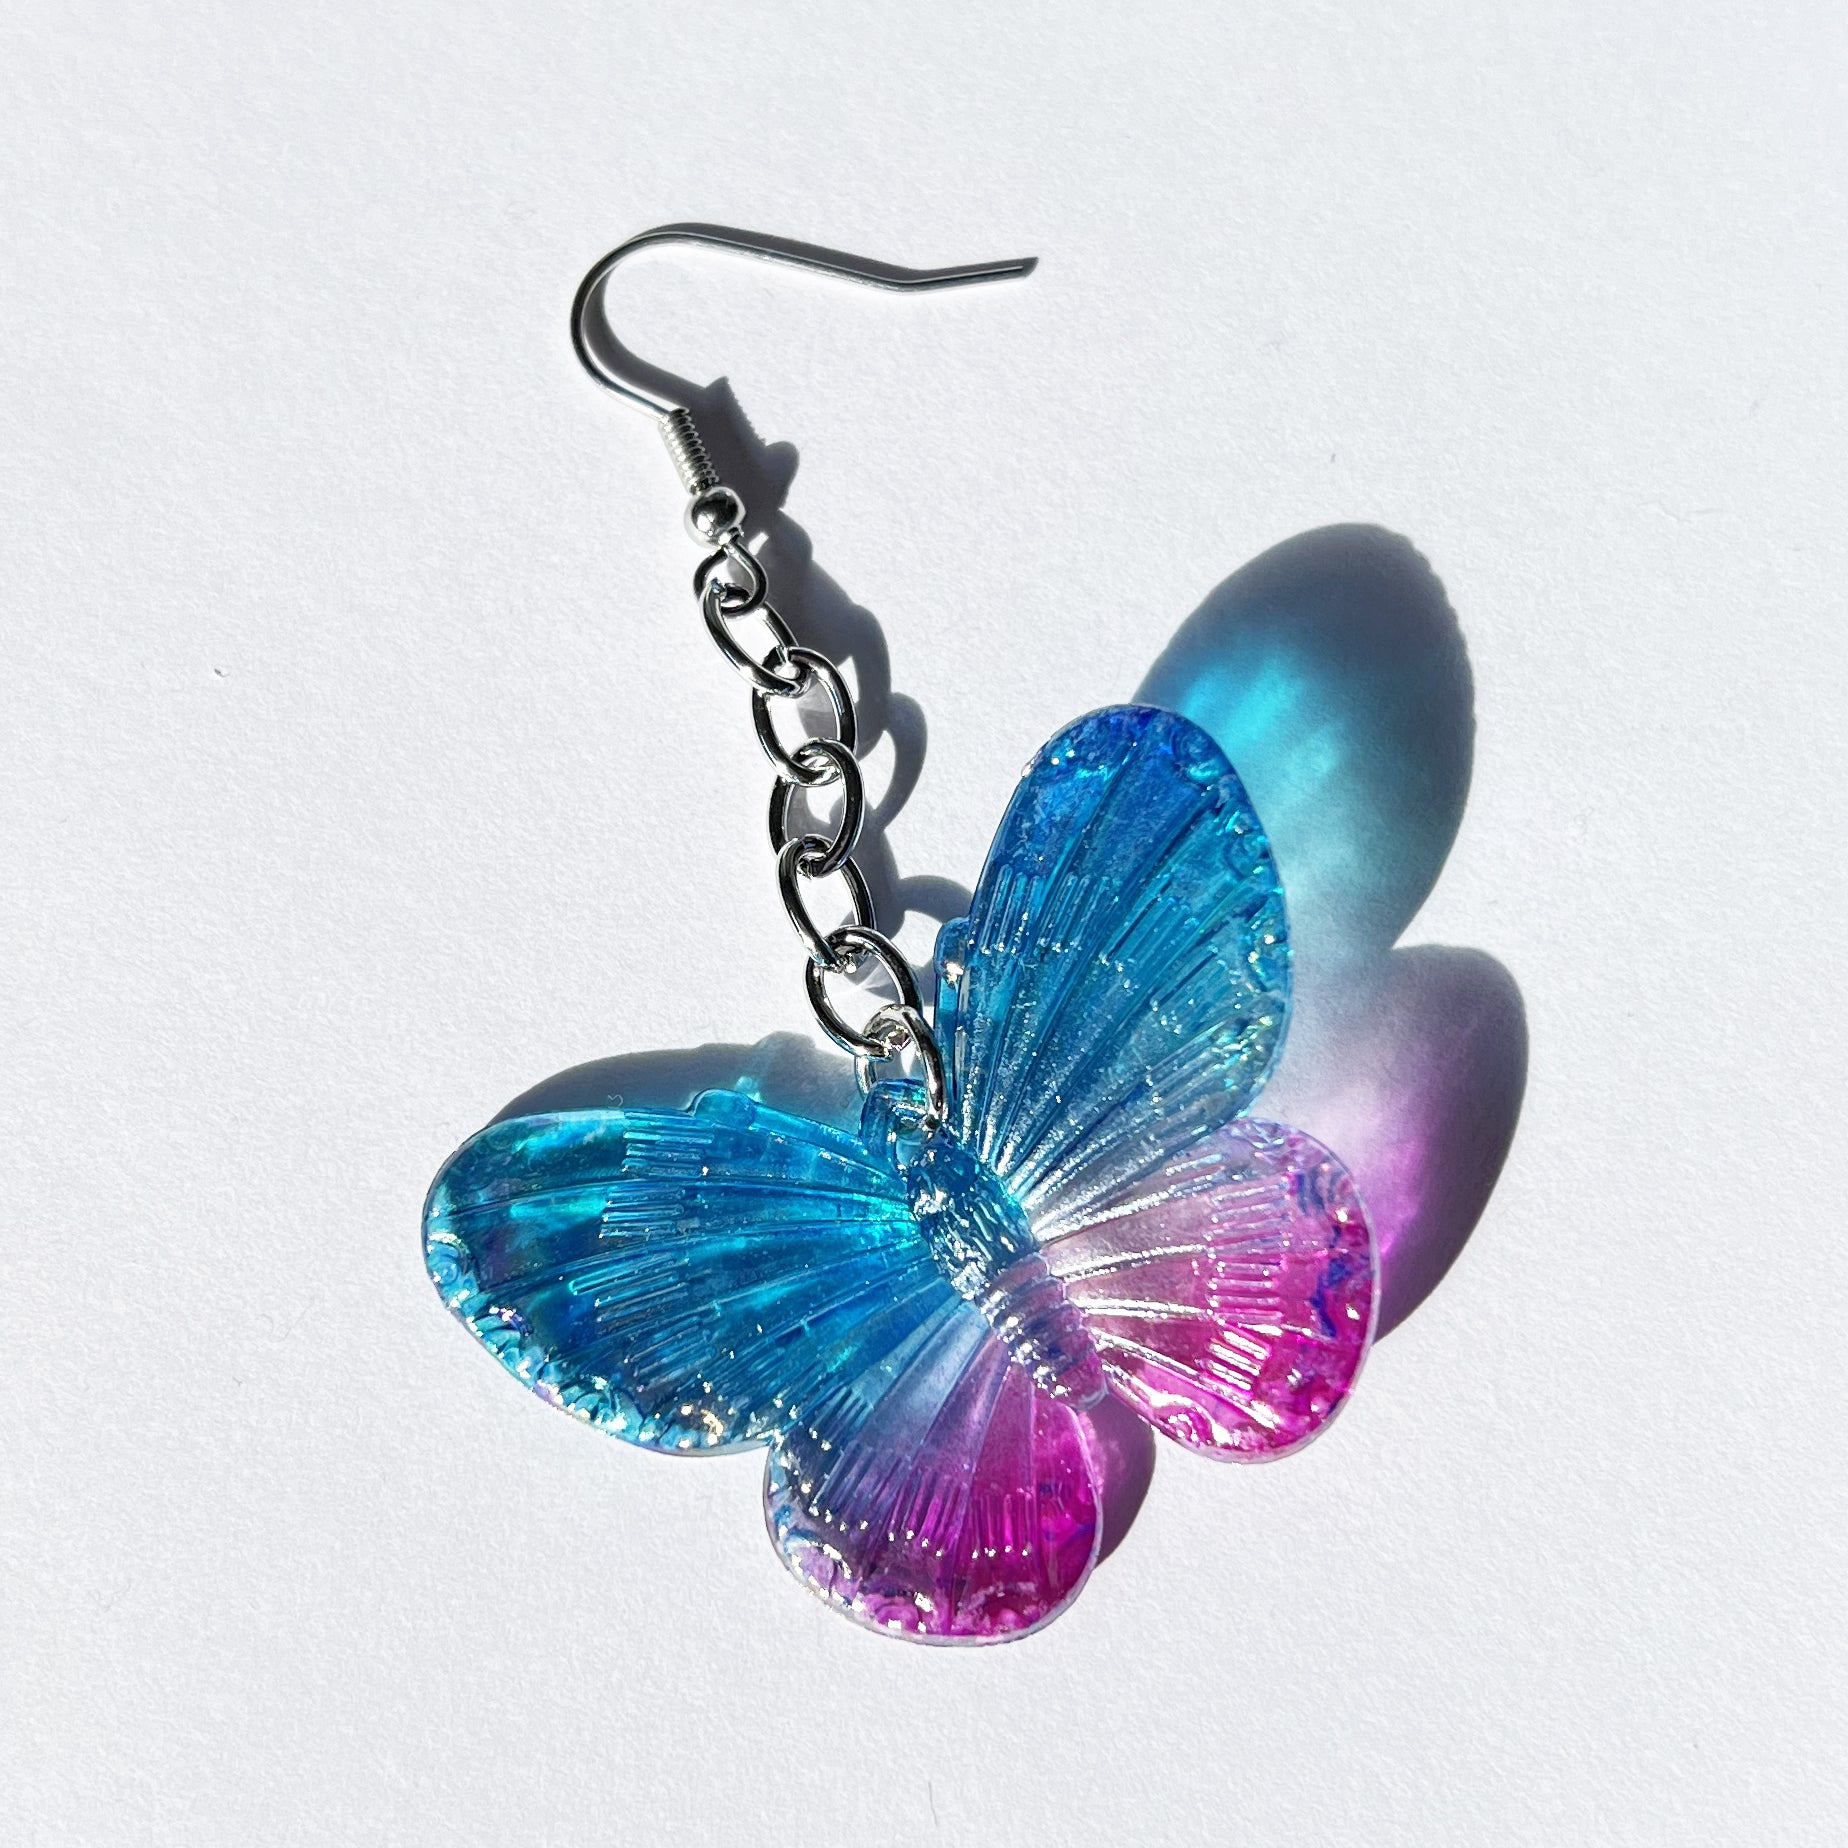 Butterfly Earrings Irridescent